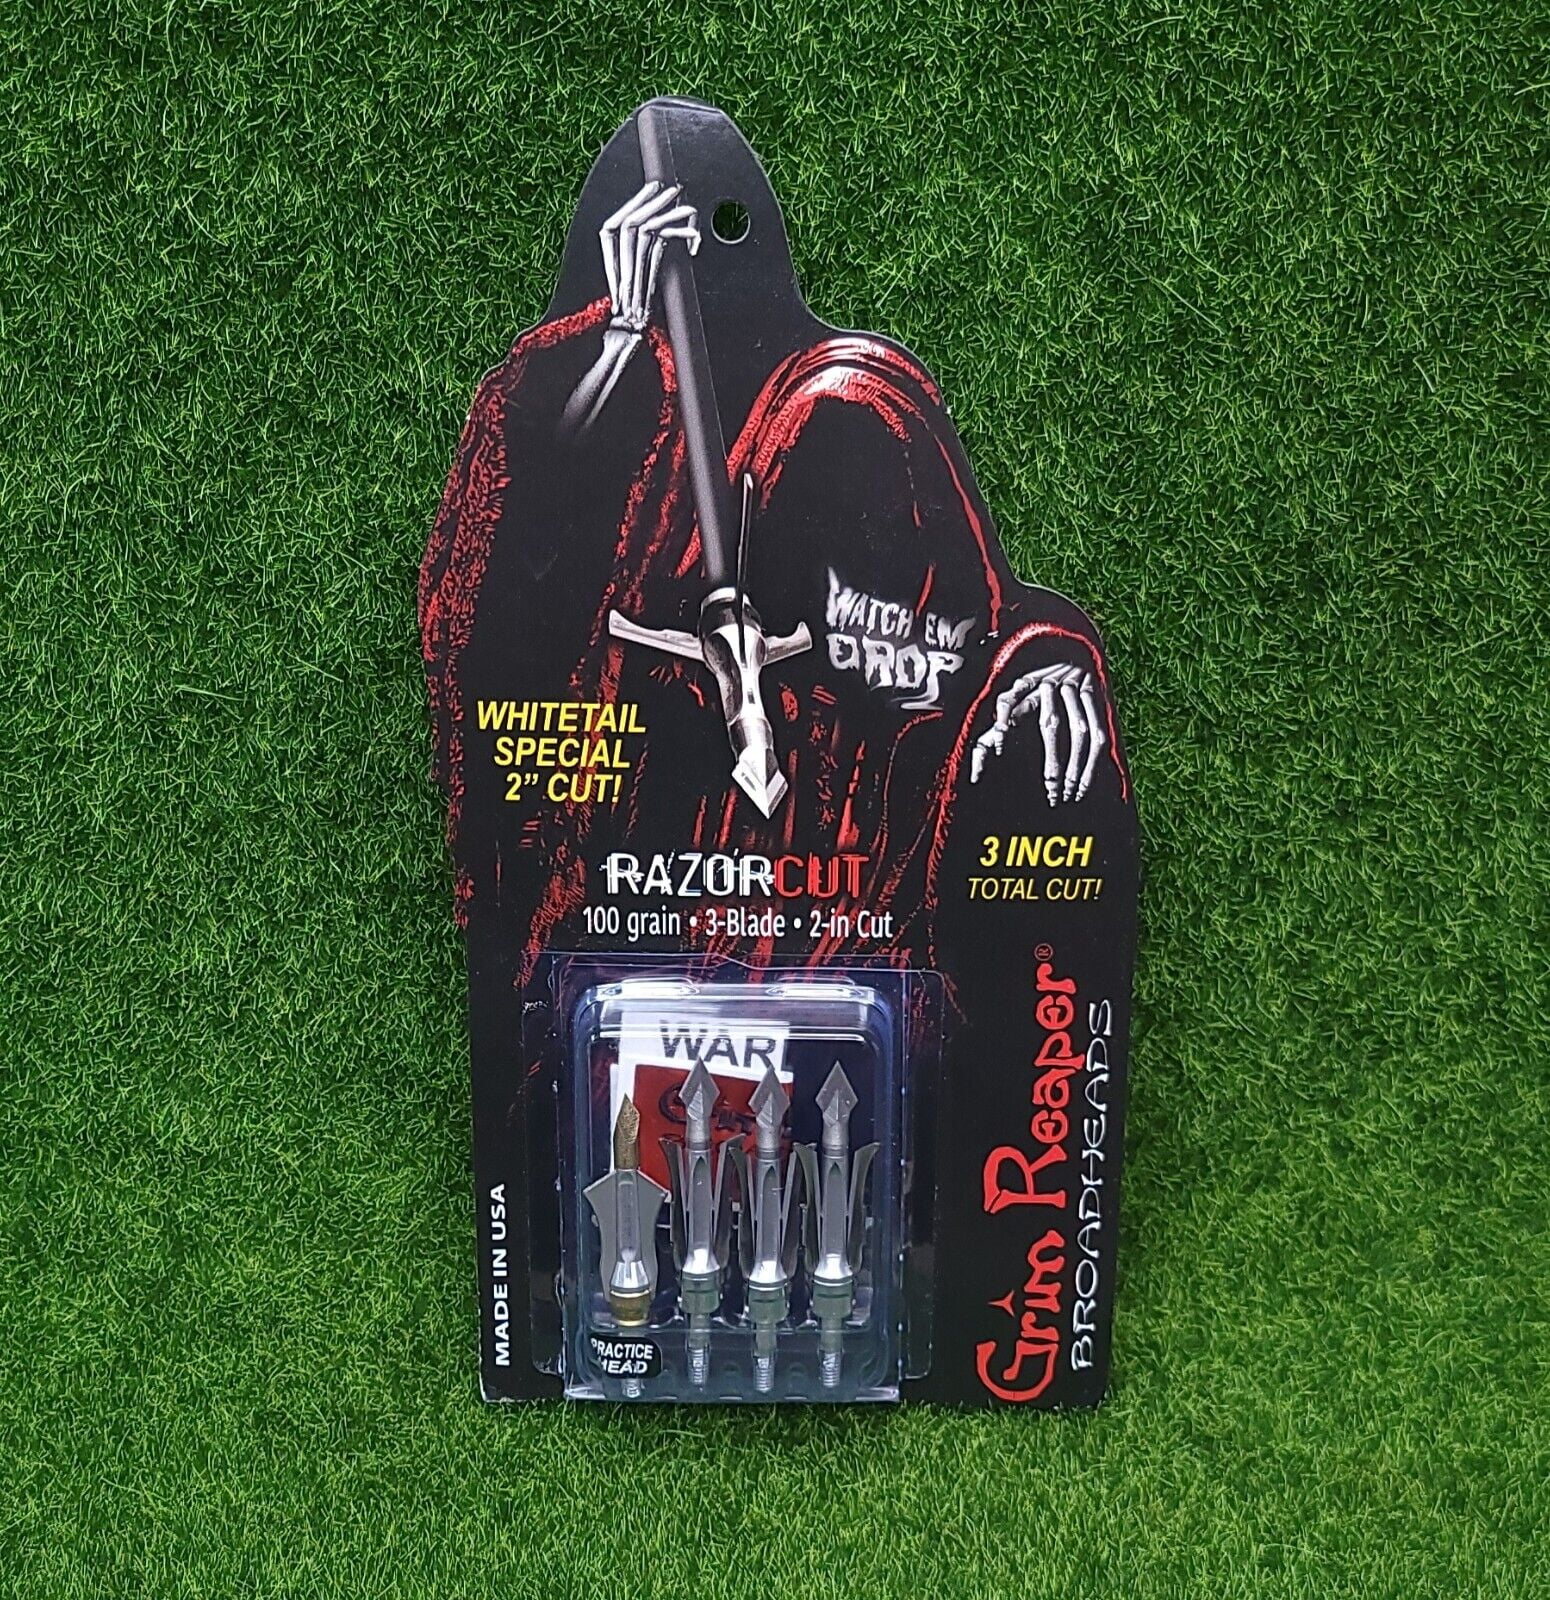 Grim Reaper RazorCut 2" 3 Blade 100 Grain Broadhead Whitetail Special 3 Pack 